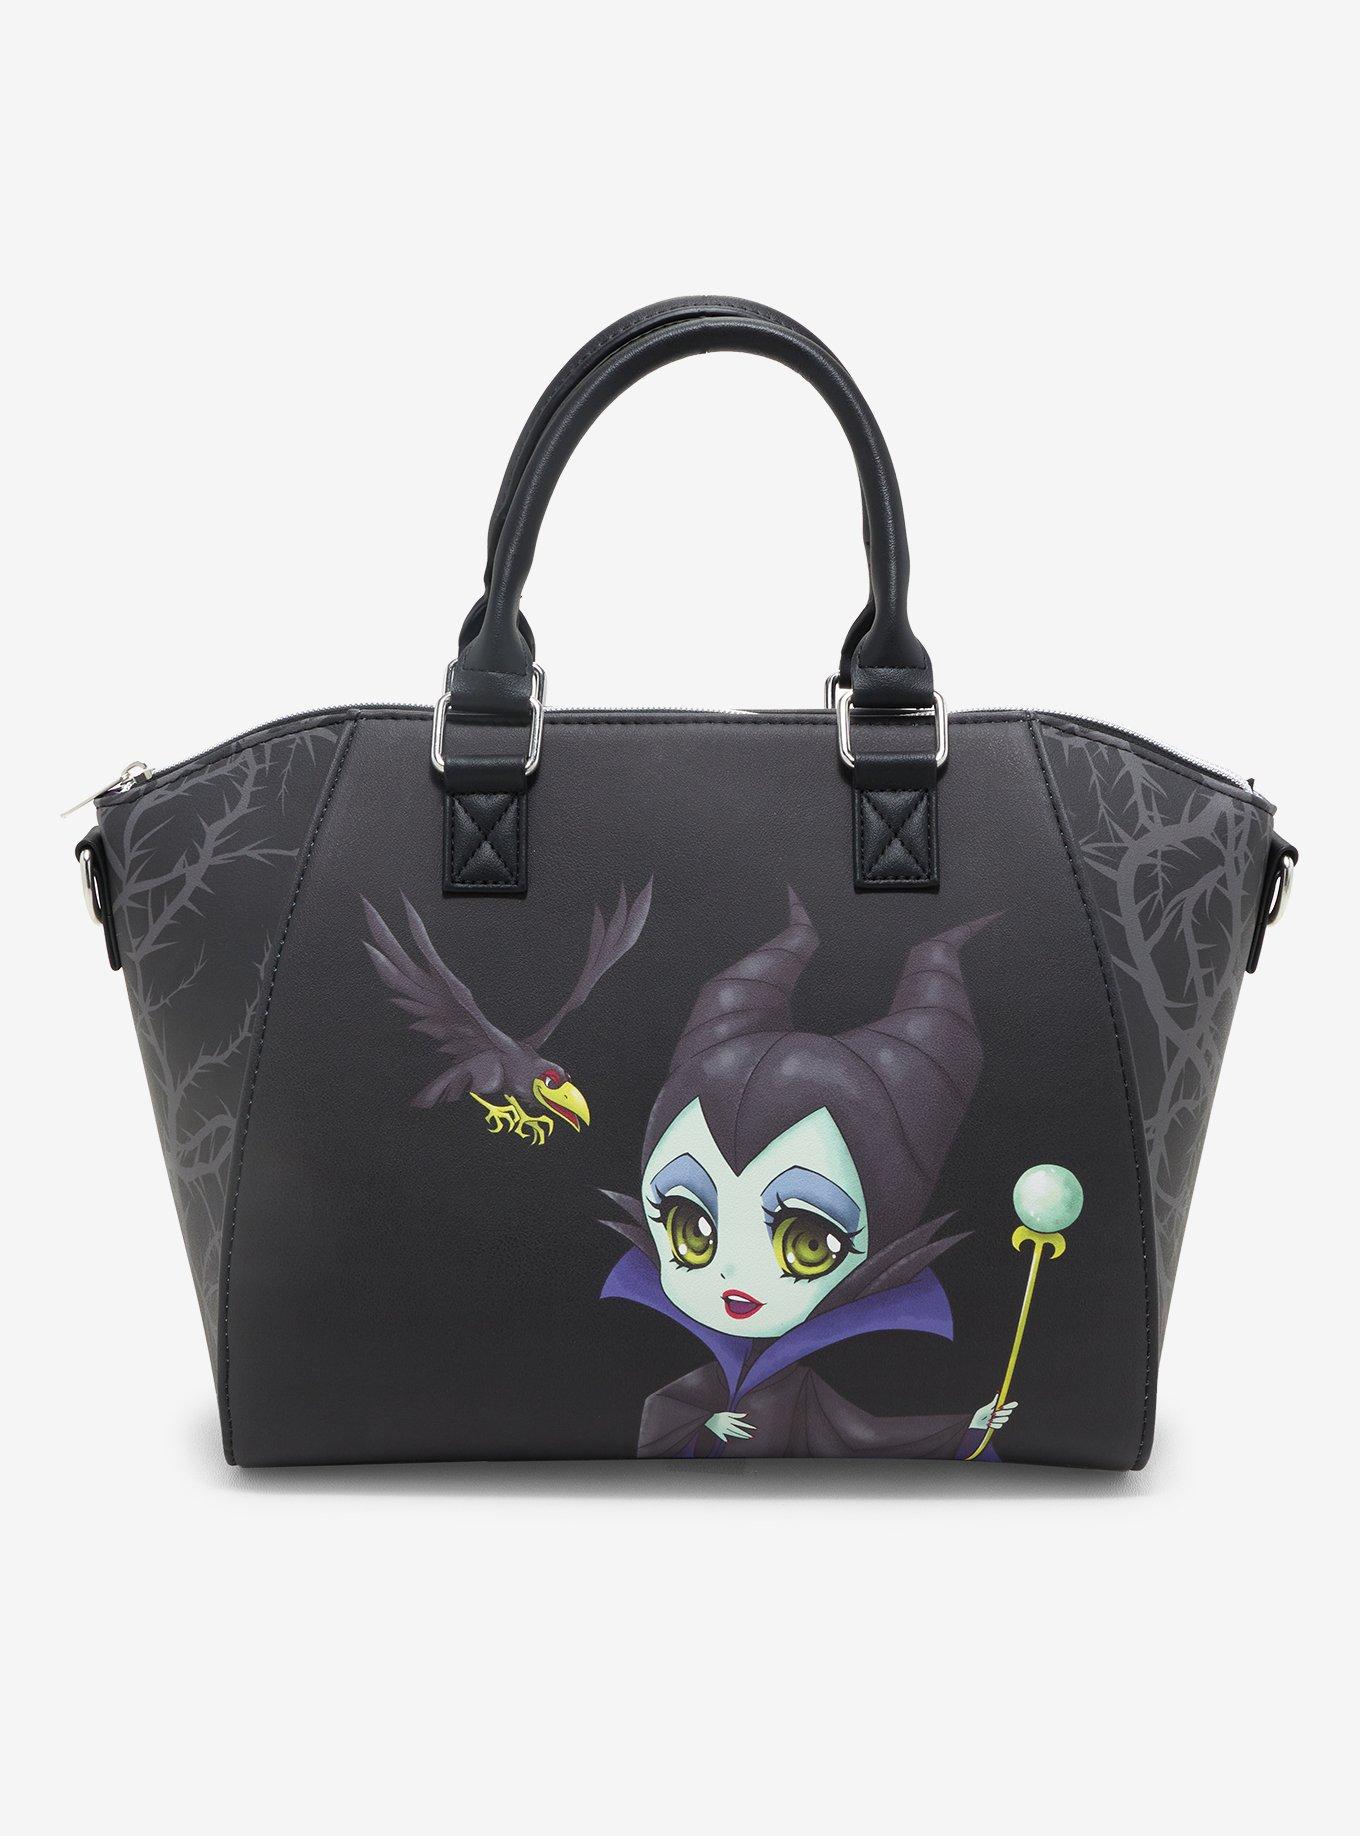 Loungefly x Disney Maleficent Dragon Mini Backpack